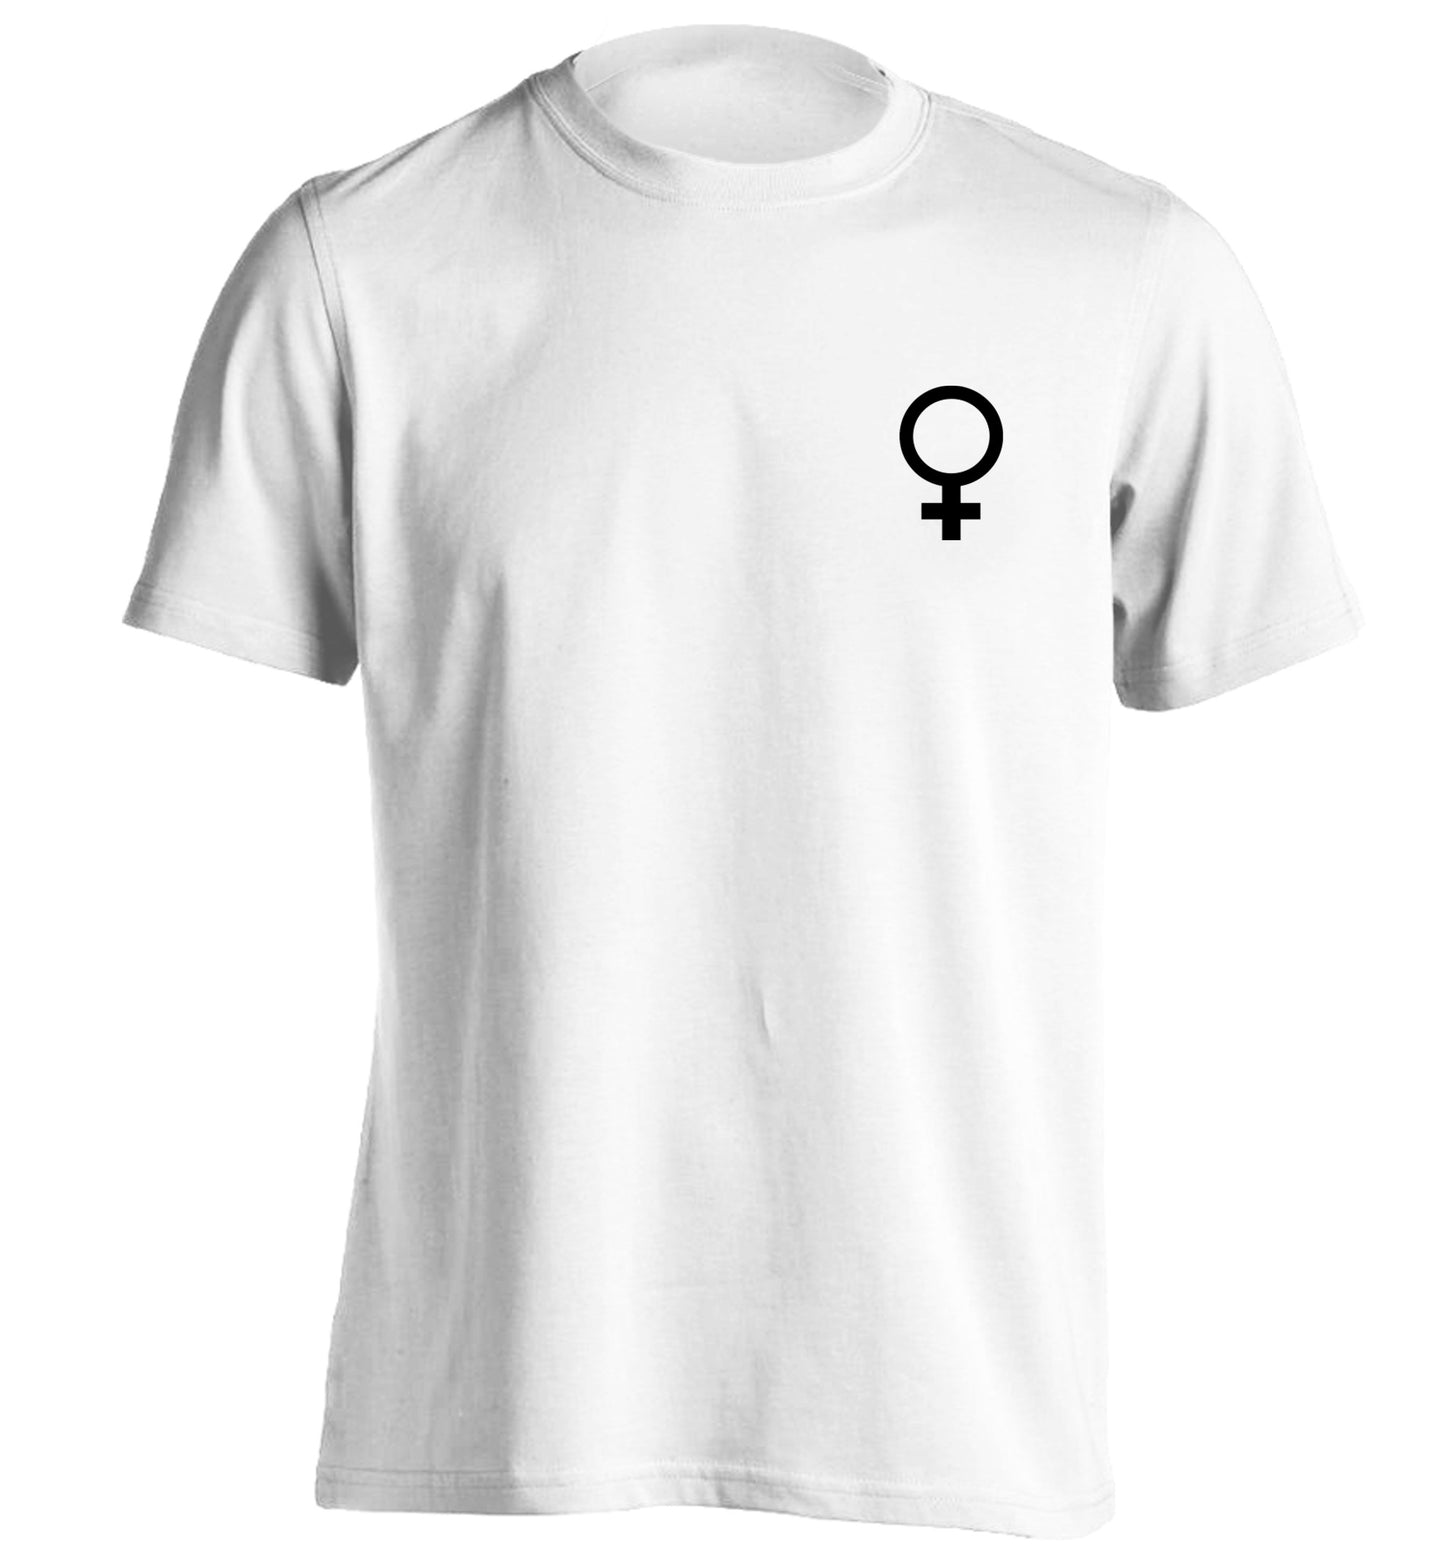 Female pocket symbol adults unisex white Tshirt 2XL